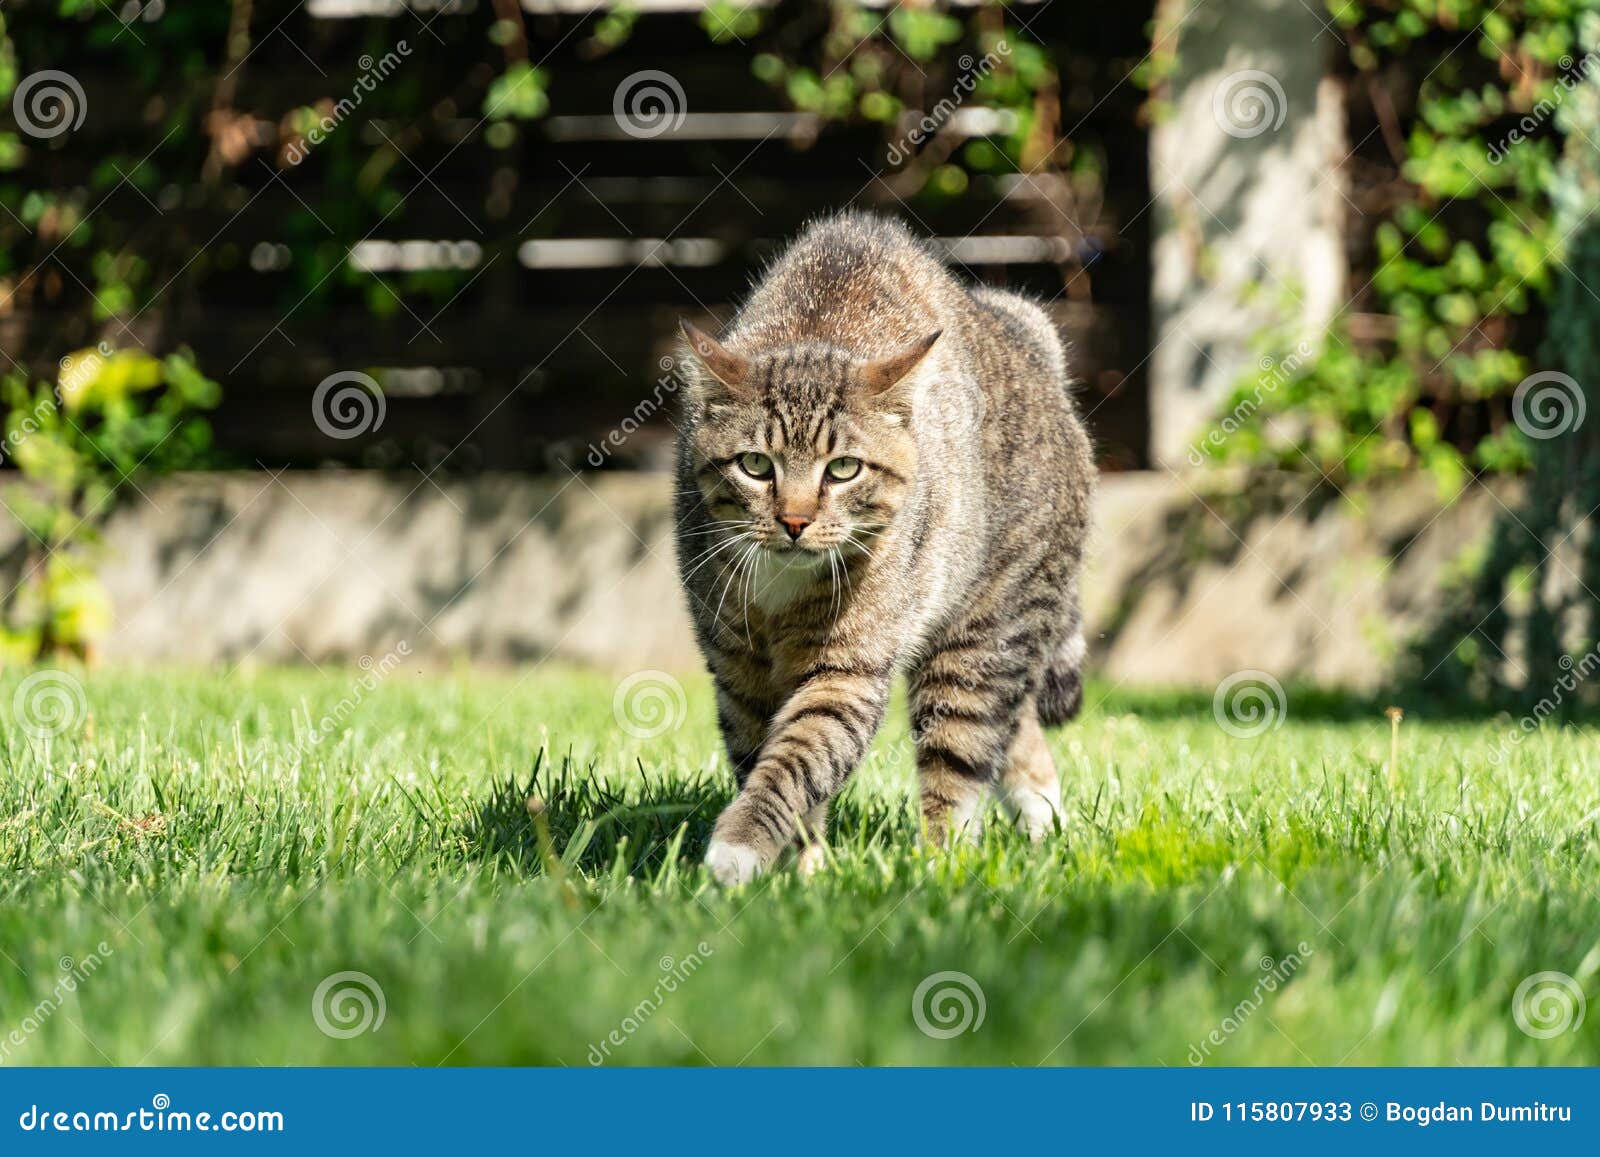 angry cat defending territory